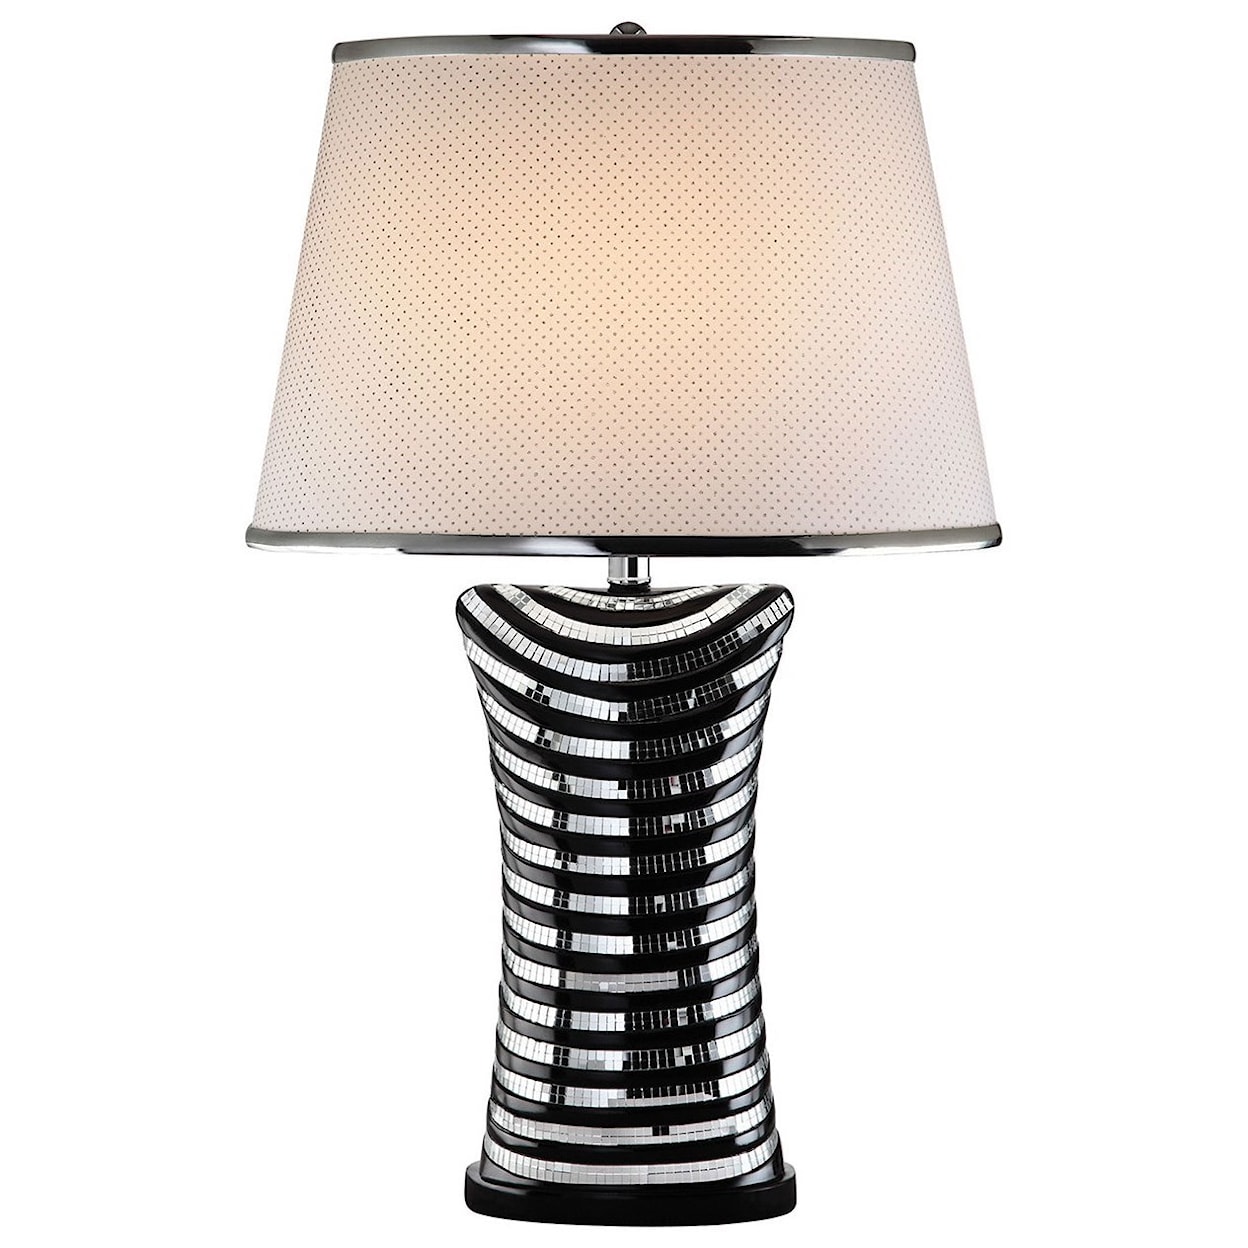 Furniture of America Mona Table Lamp